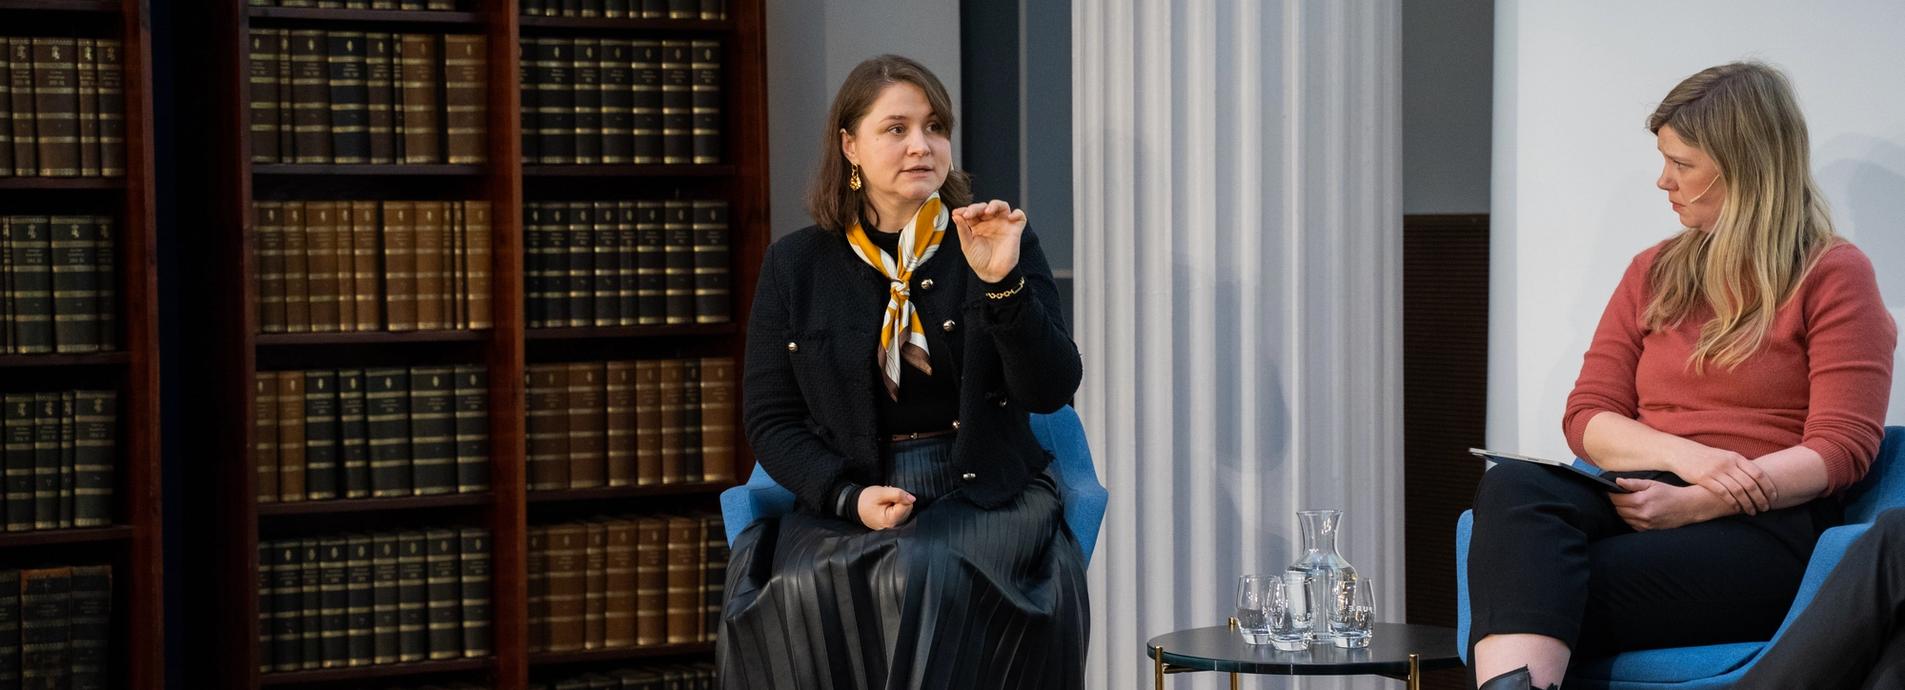 Oleksandra Romantsova på Nobel Peace Talks arrangement